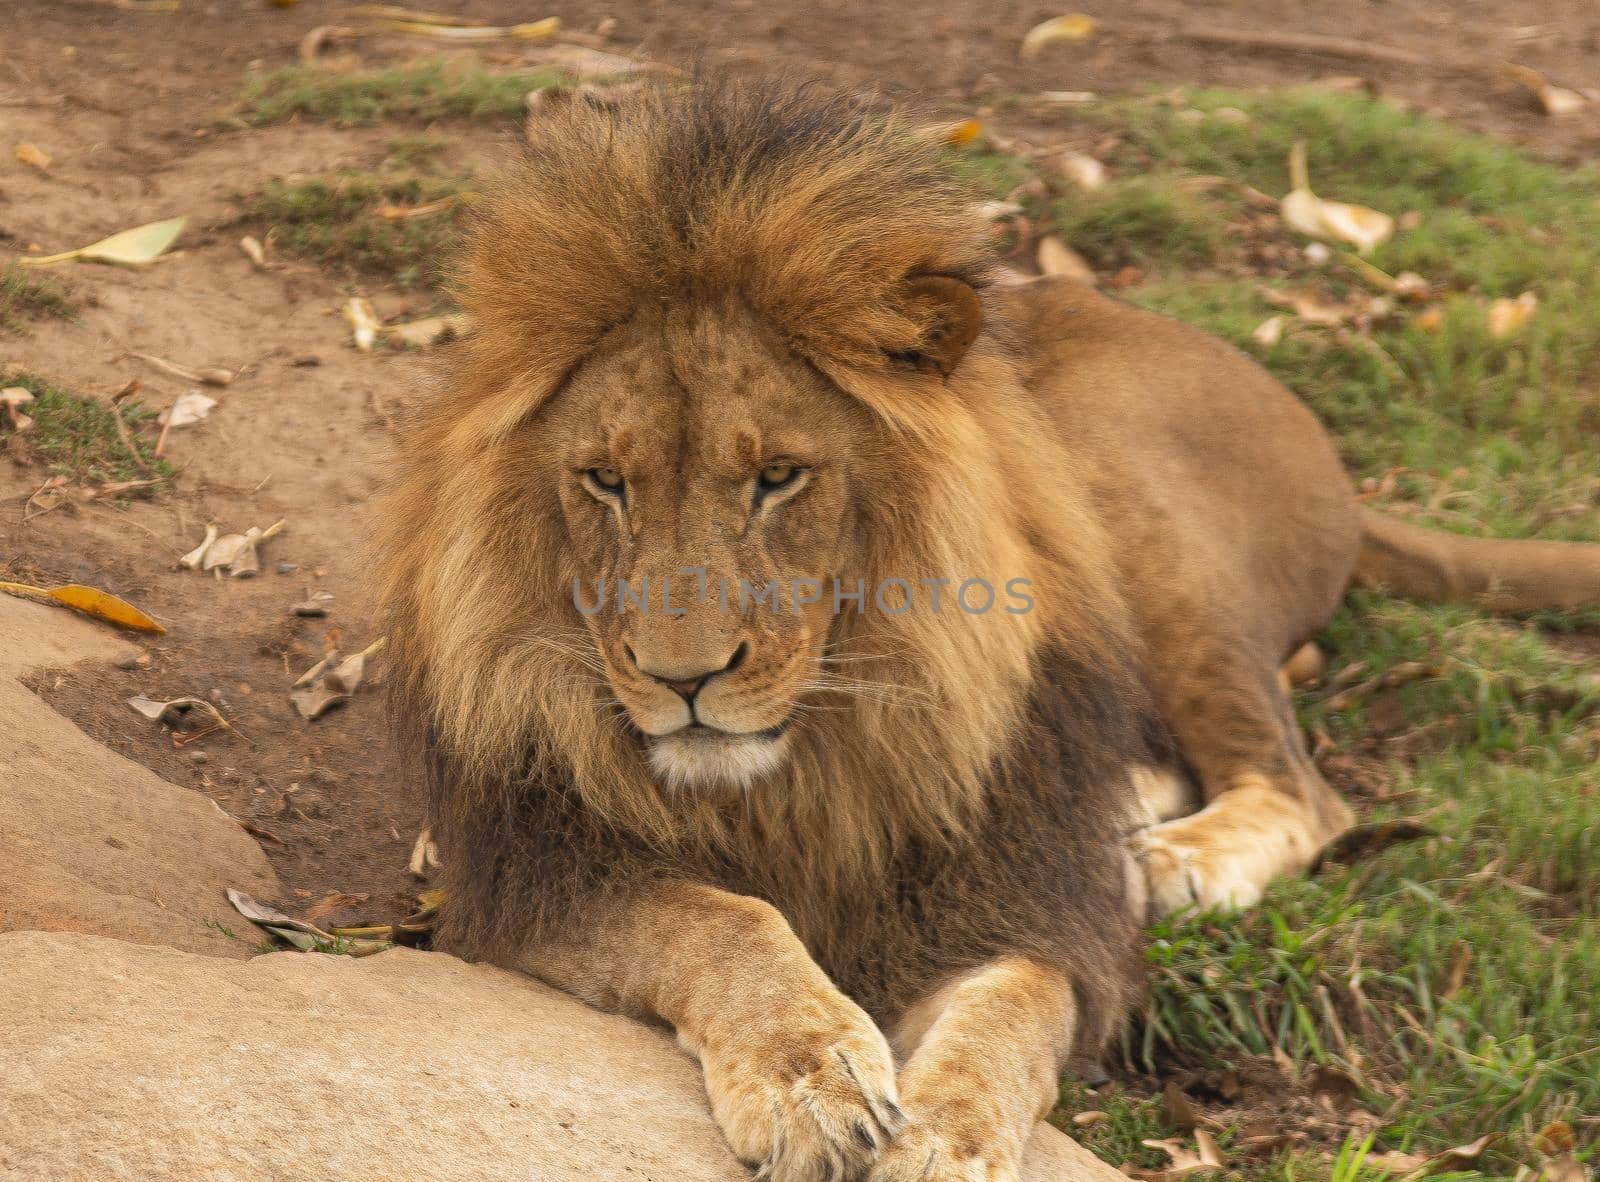 A lion close up image by Yagyaparajuli